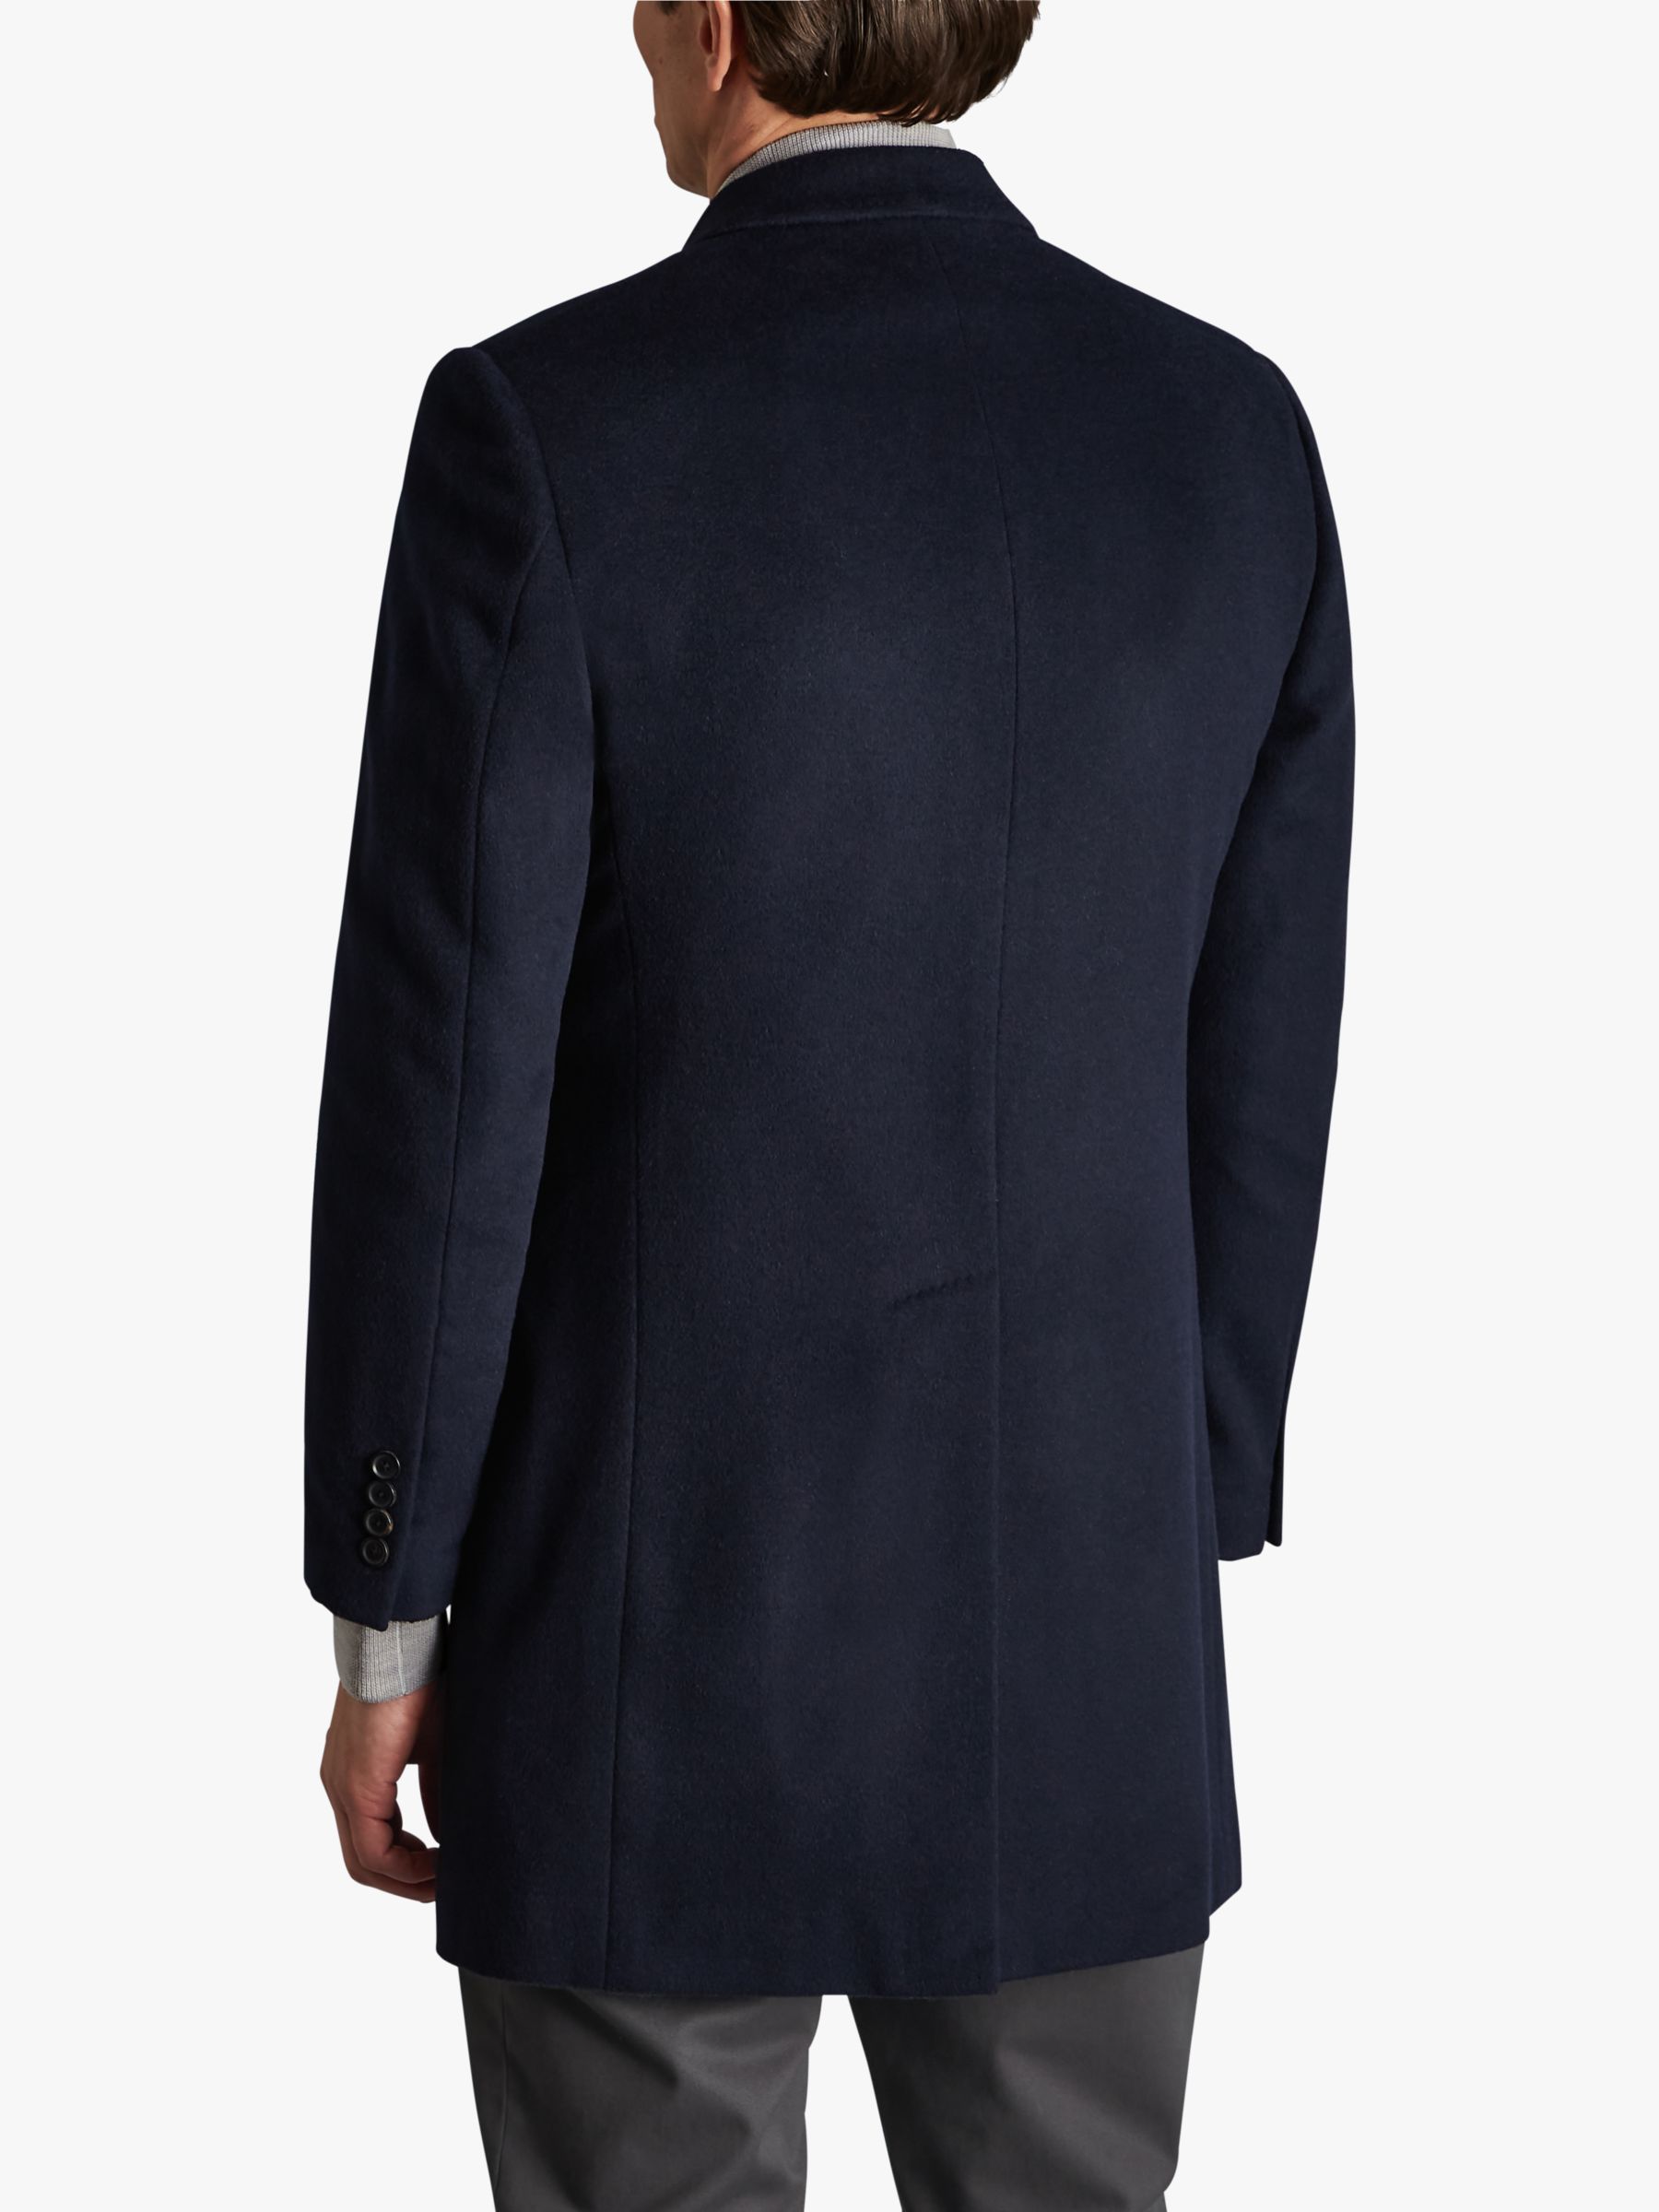 Charles Tyrwhitt Pure Wool Overcoat, Navy Blue, 36R